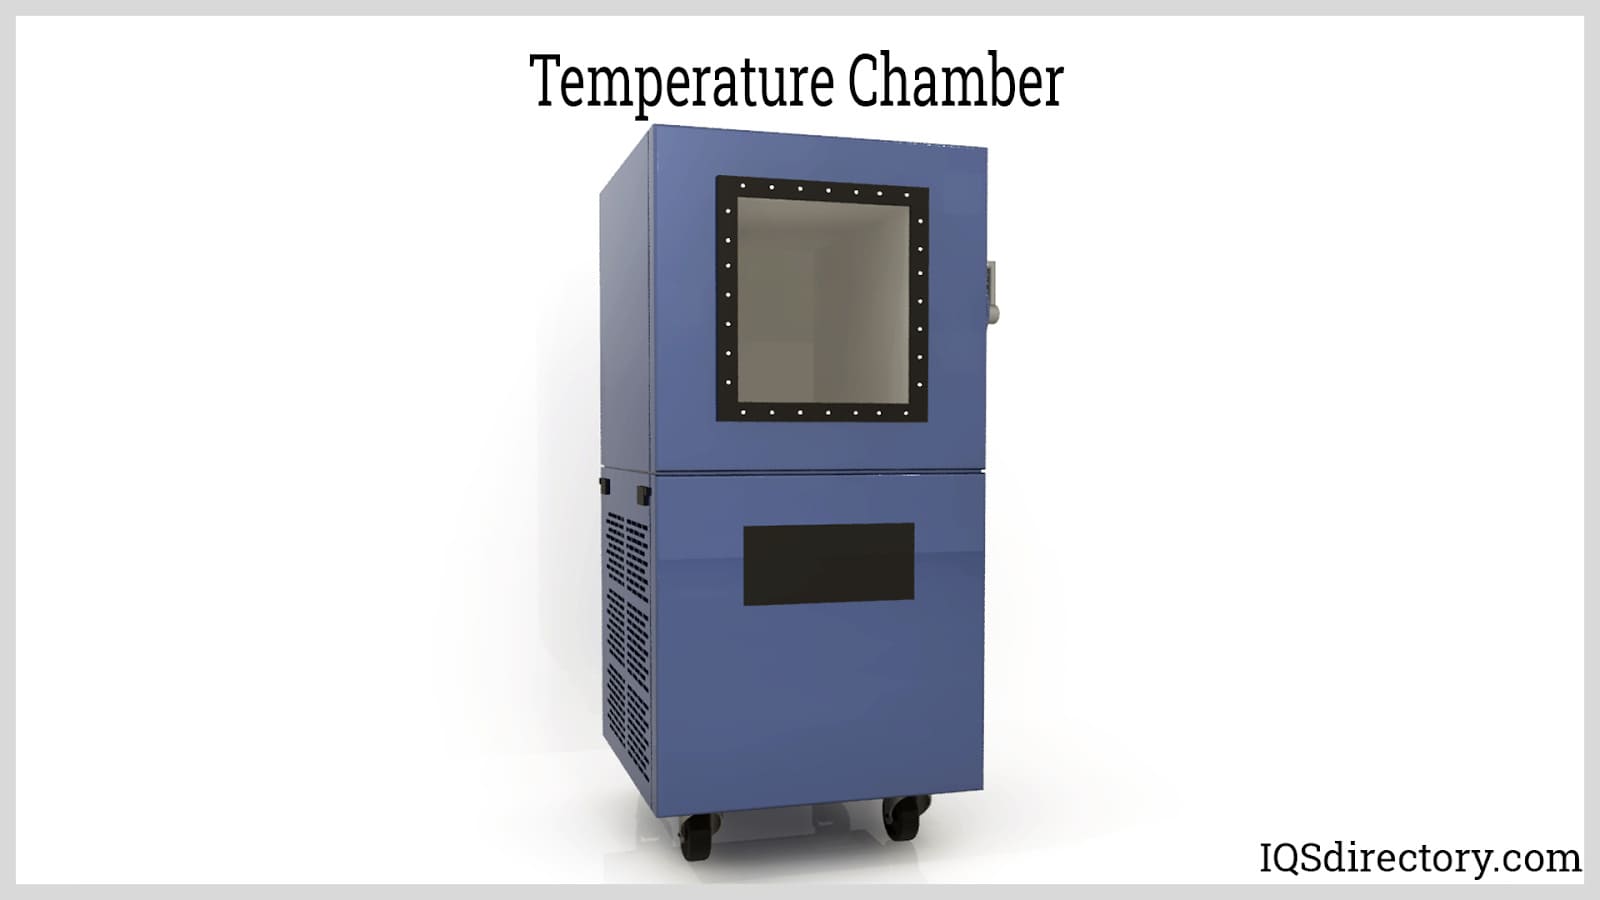 Temperature Chambers